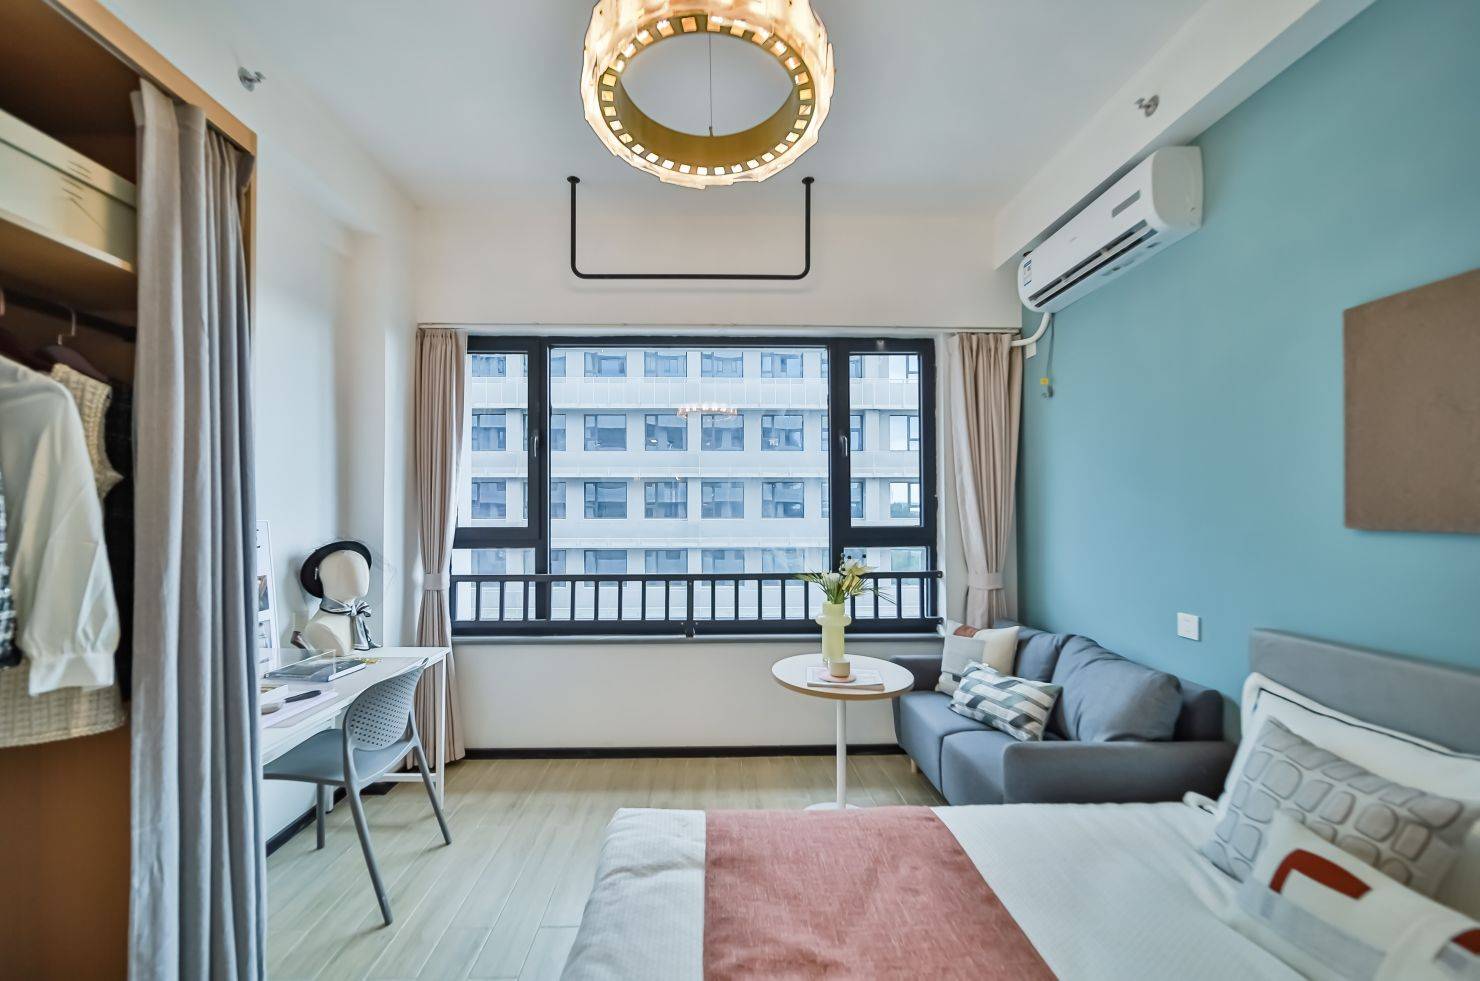 Nanjing-Qixia-Cozy Home,Clean&Comfy,No Gender Limit,Hustle & Bustle,“Friends”,Chilled,LGBTQ Friendly